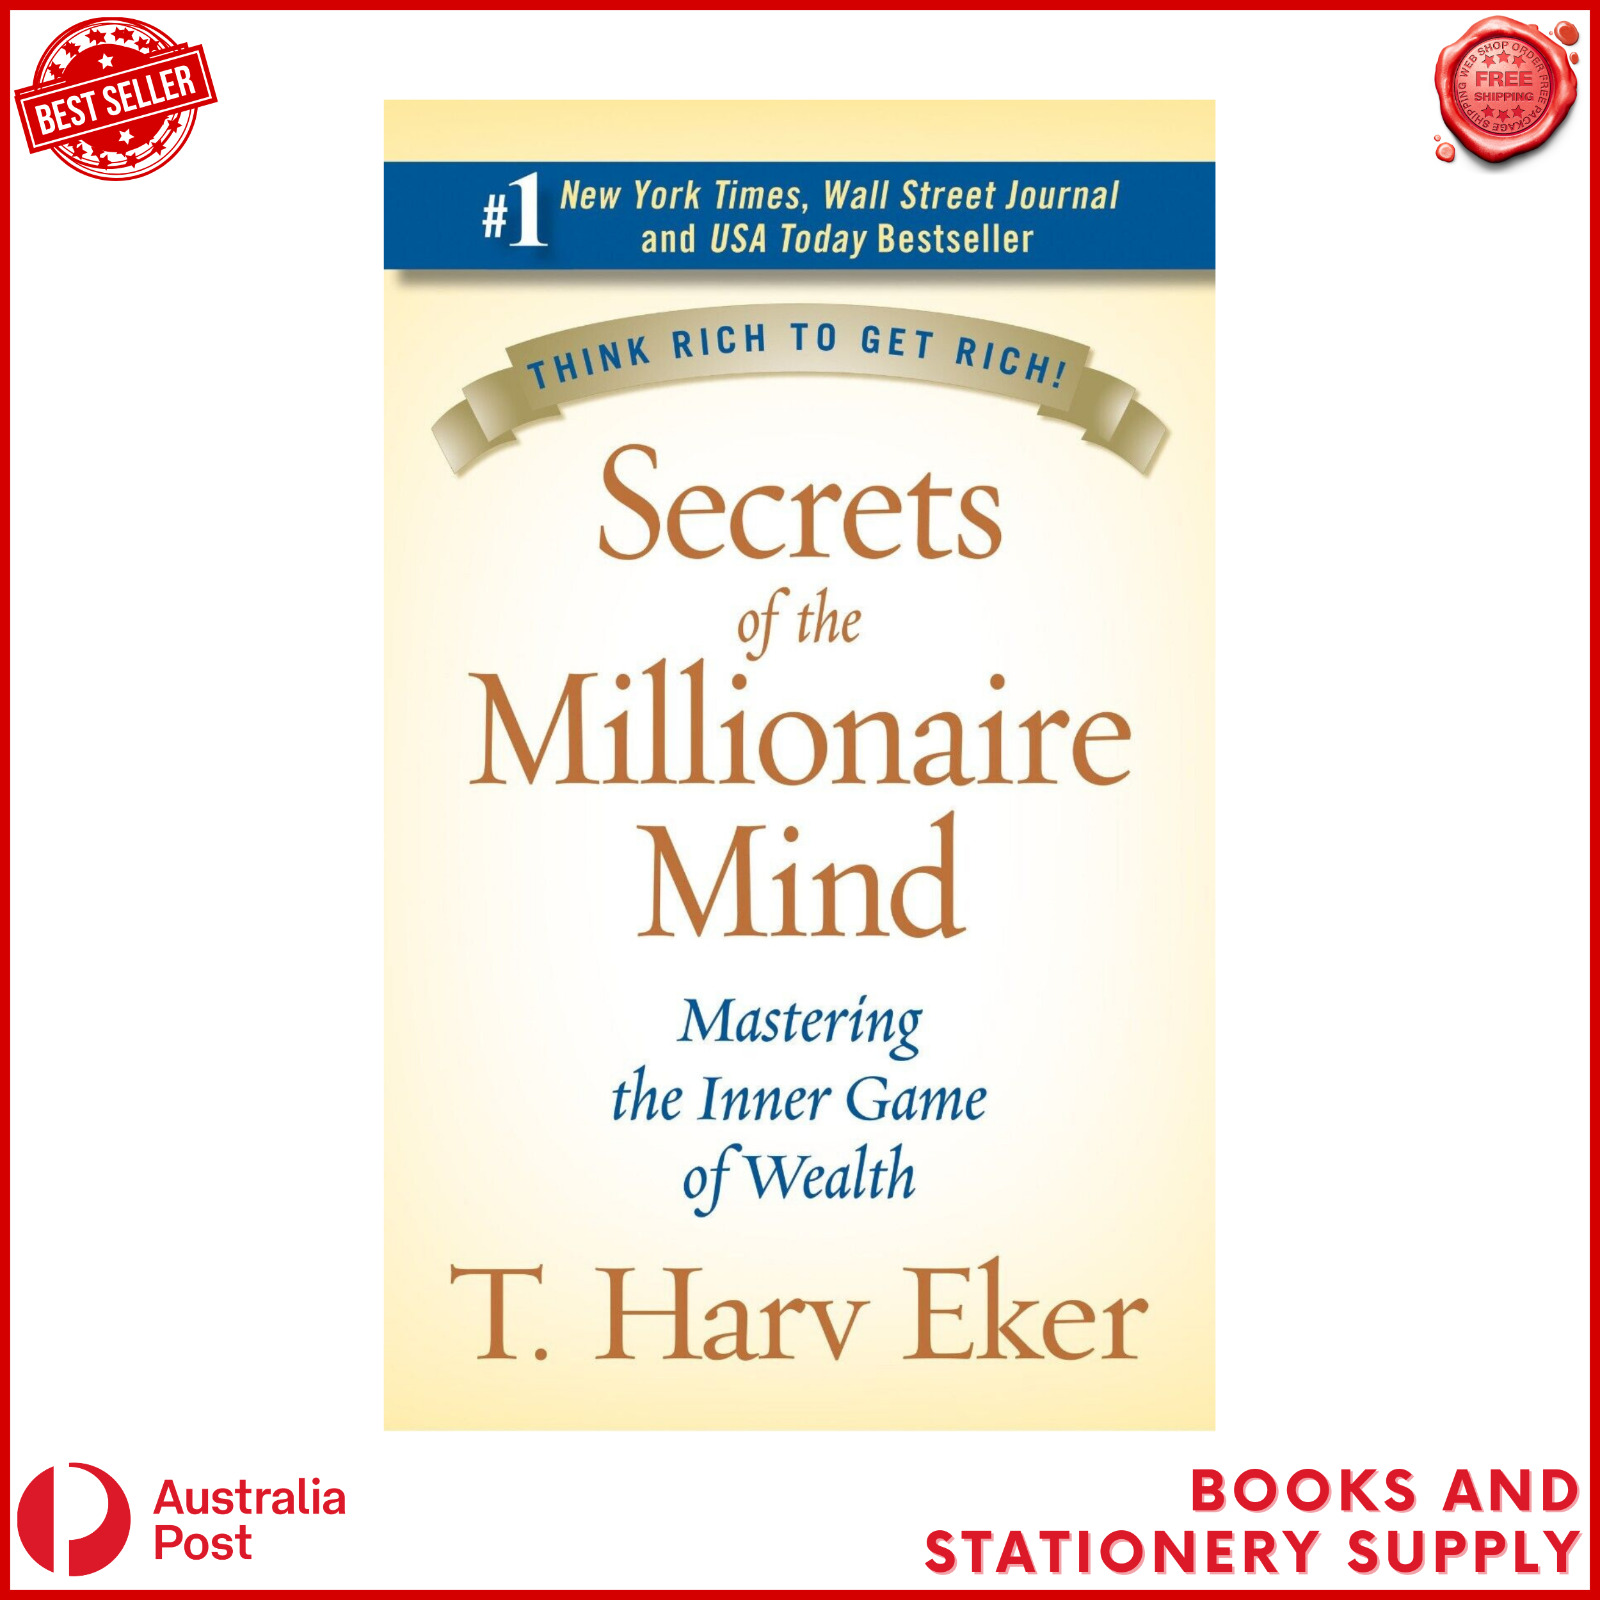 Secrets of the Millionaire Mind: Mastering Inner Game of Wealth by T. Harv Eker